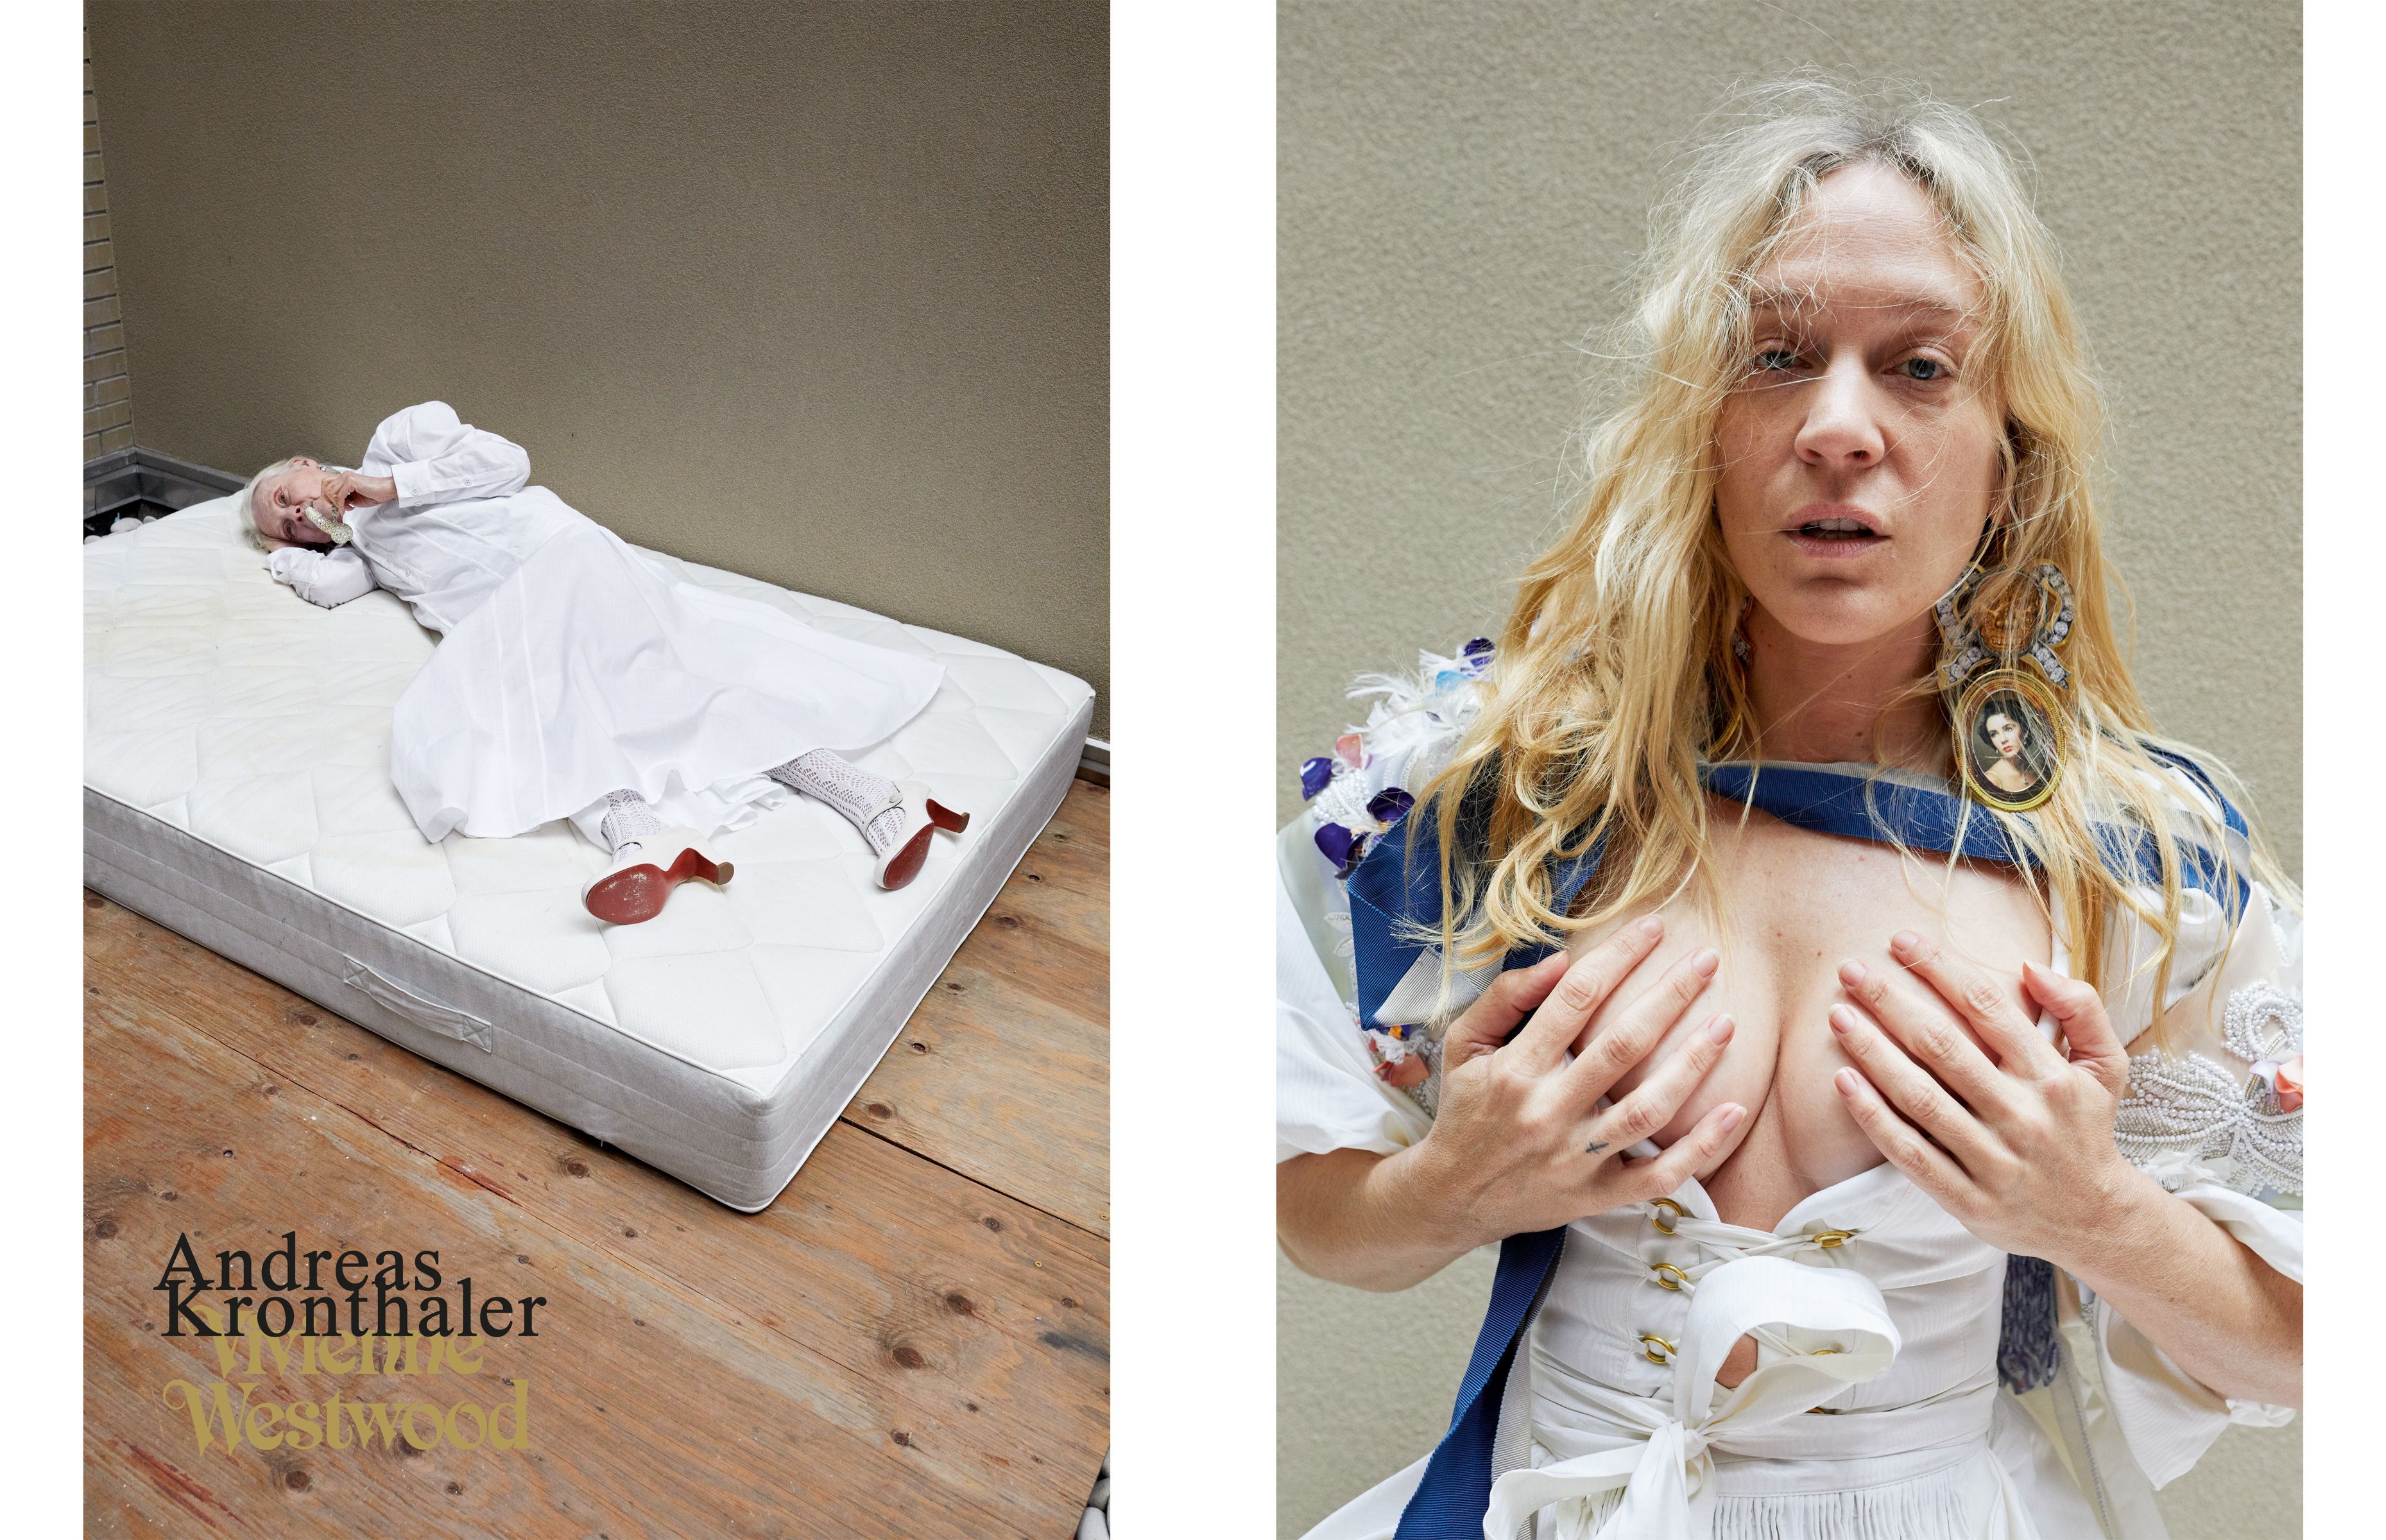 Andreas Kronthaler for Vivienne Westwood S/S 2018 - juergen teller styled by Sabina Schreder